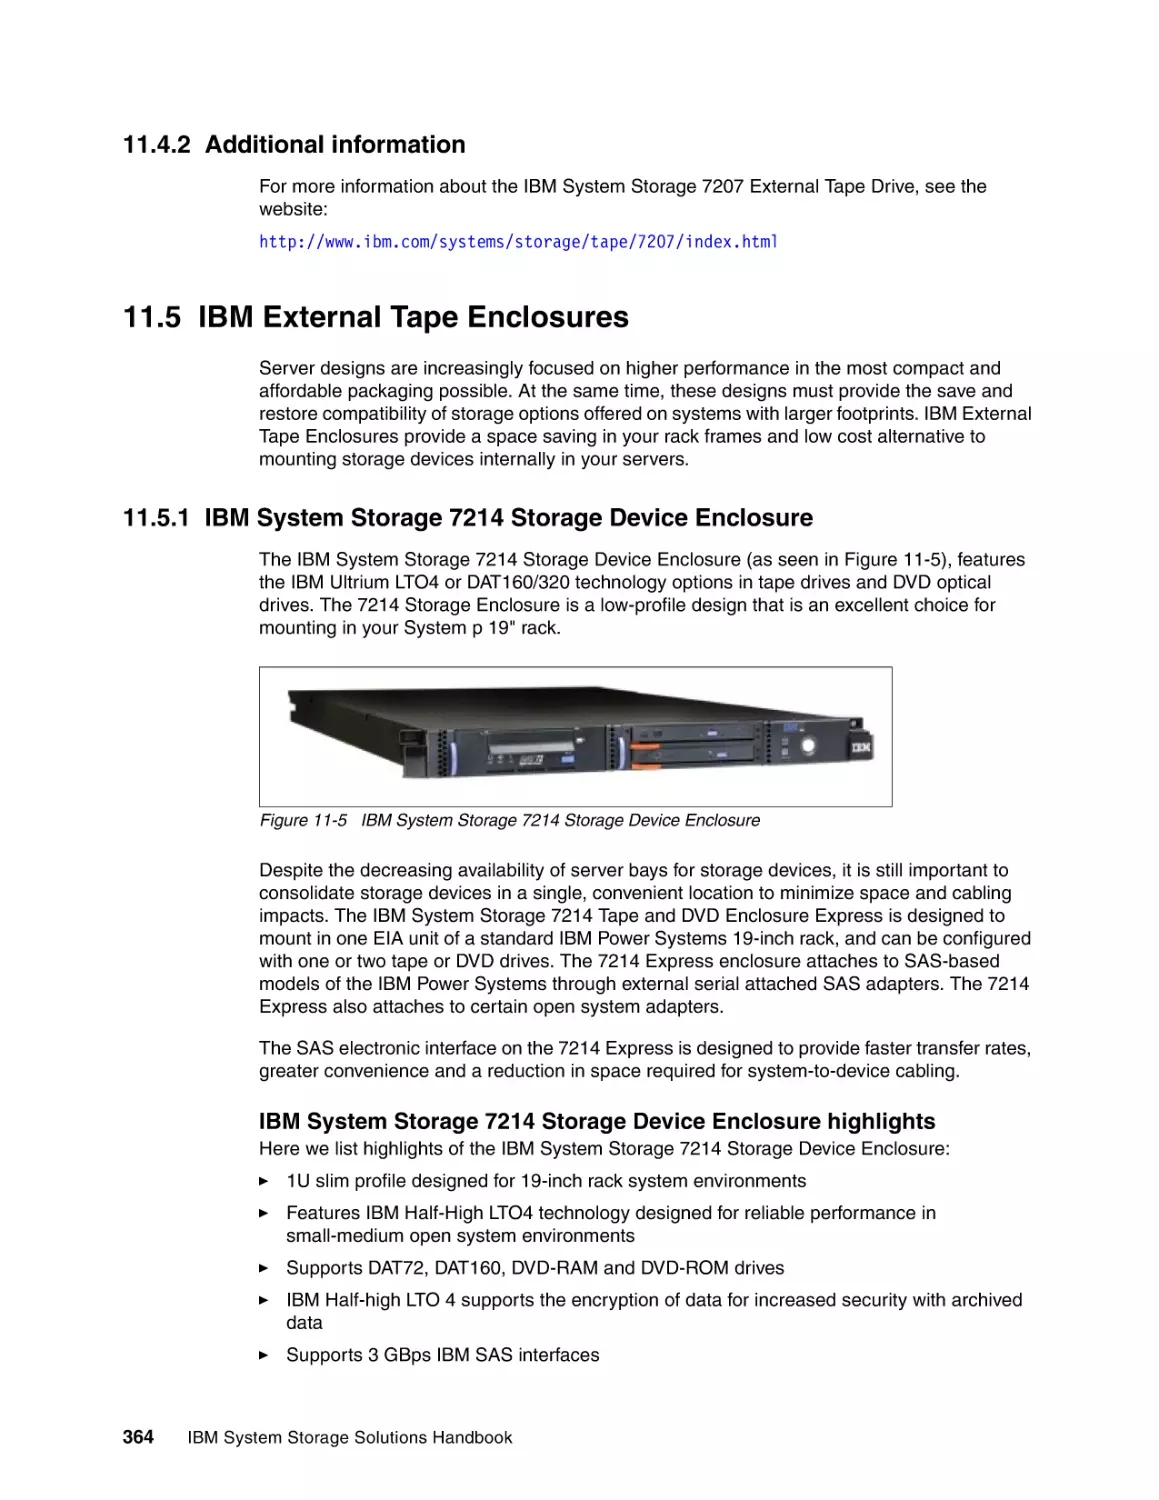 11.4.2 Additional information
11.5 IBM External Tape Enclosures
11.5.1 IBM System Storage 7214 Storage Device Enclosure